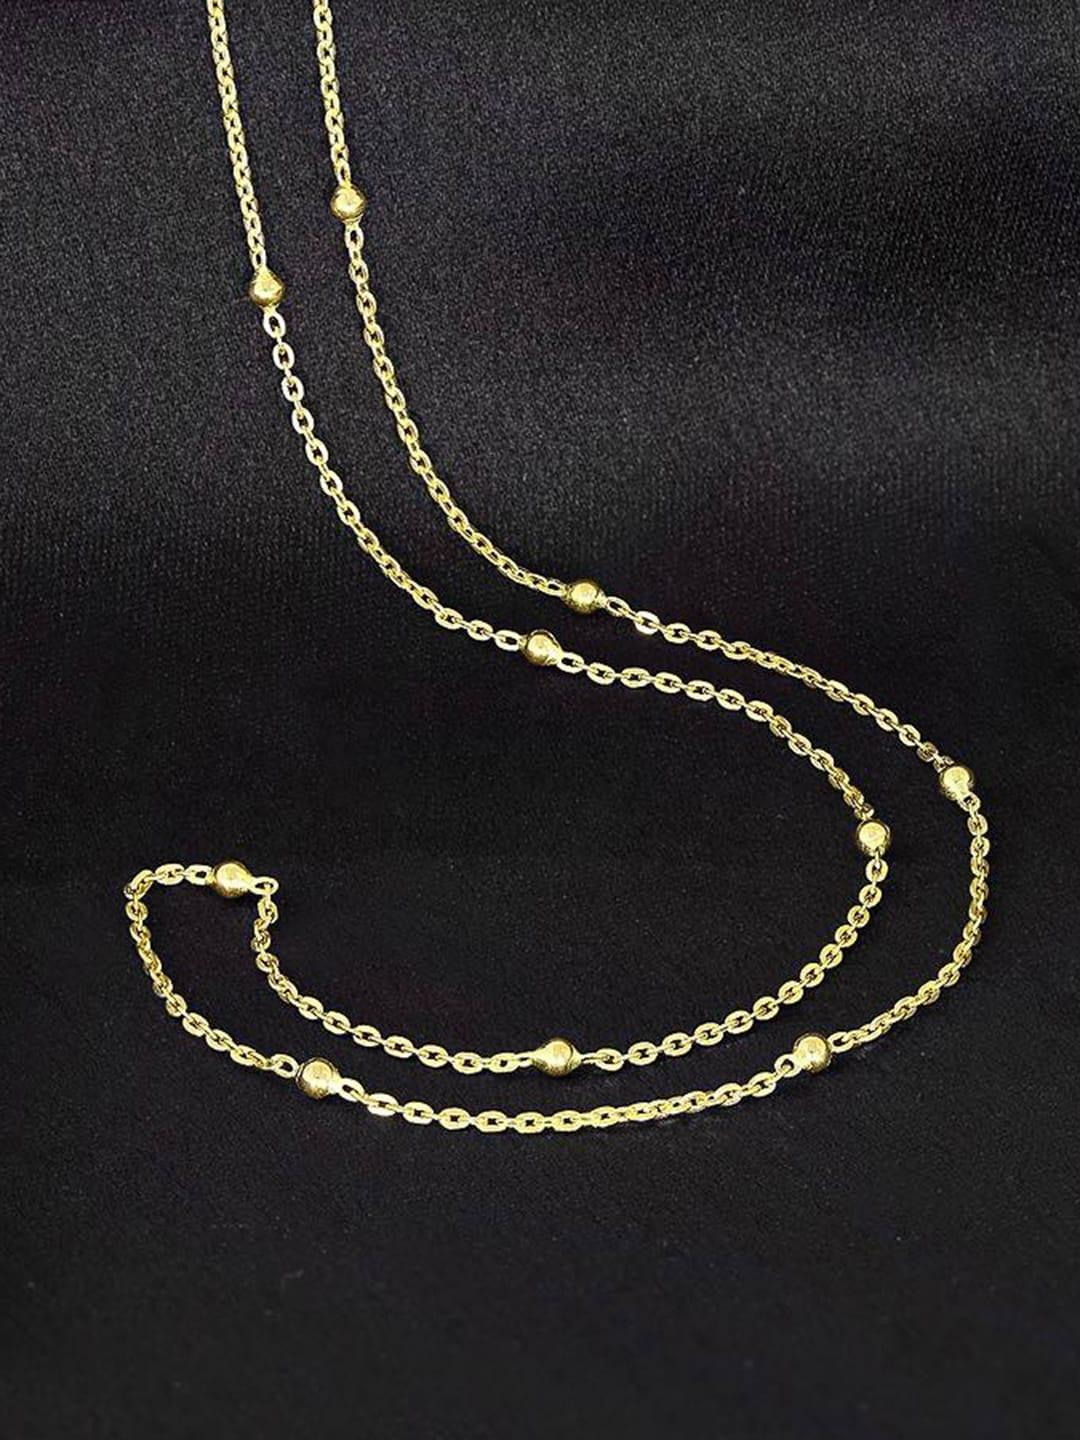 candere a kalyan jewellers company  22kt bis hallmark gold chain-4.13gm